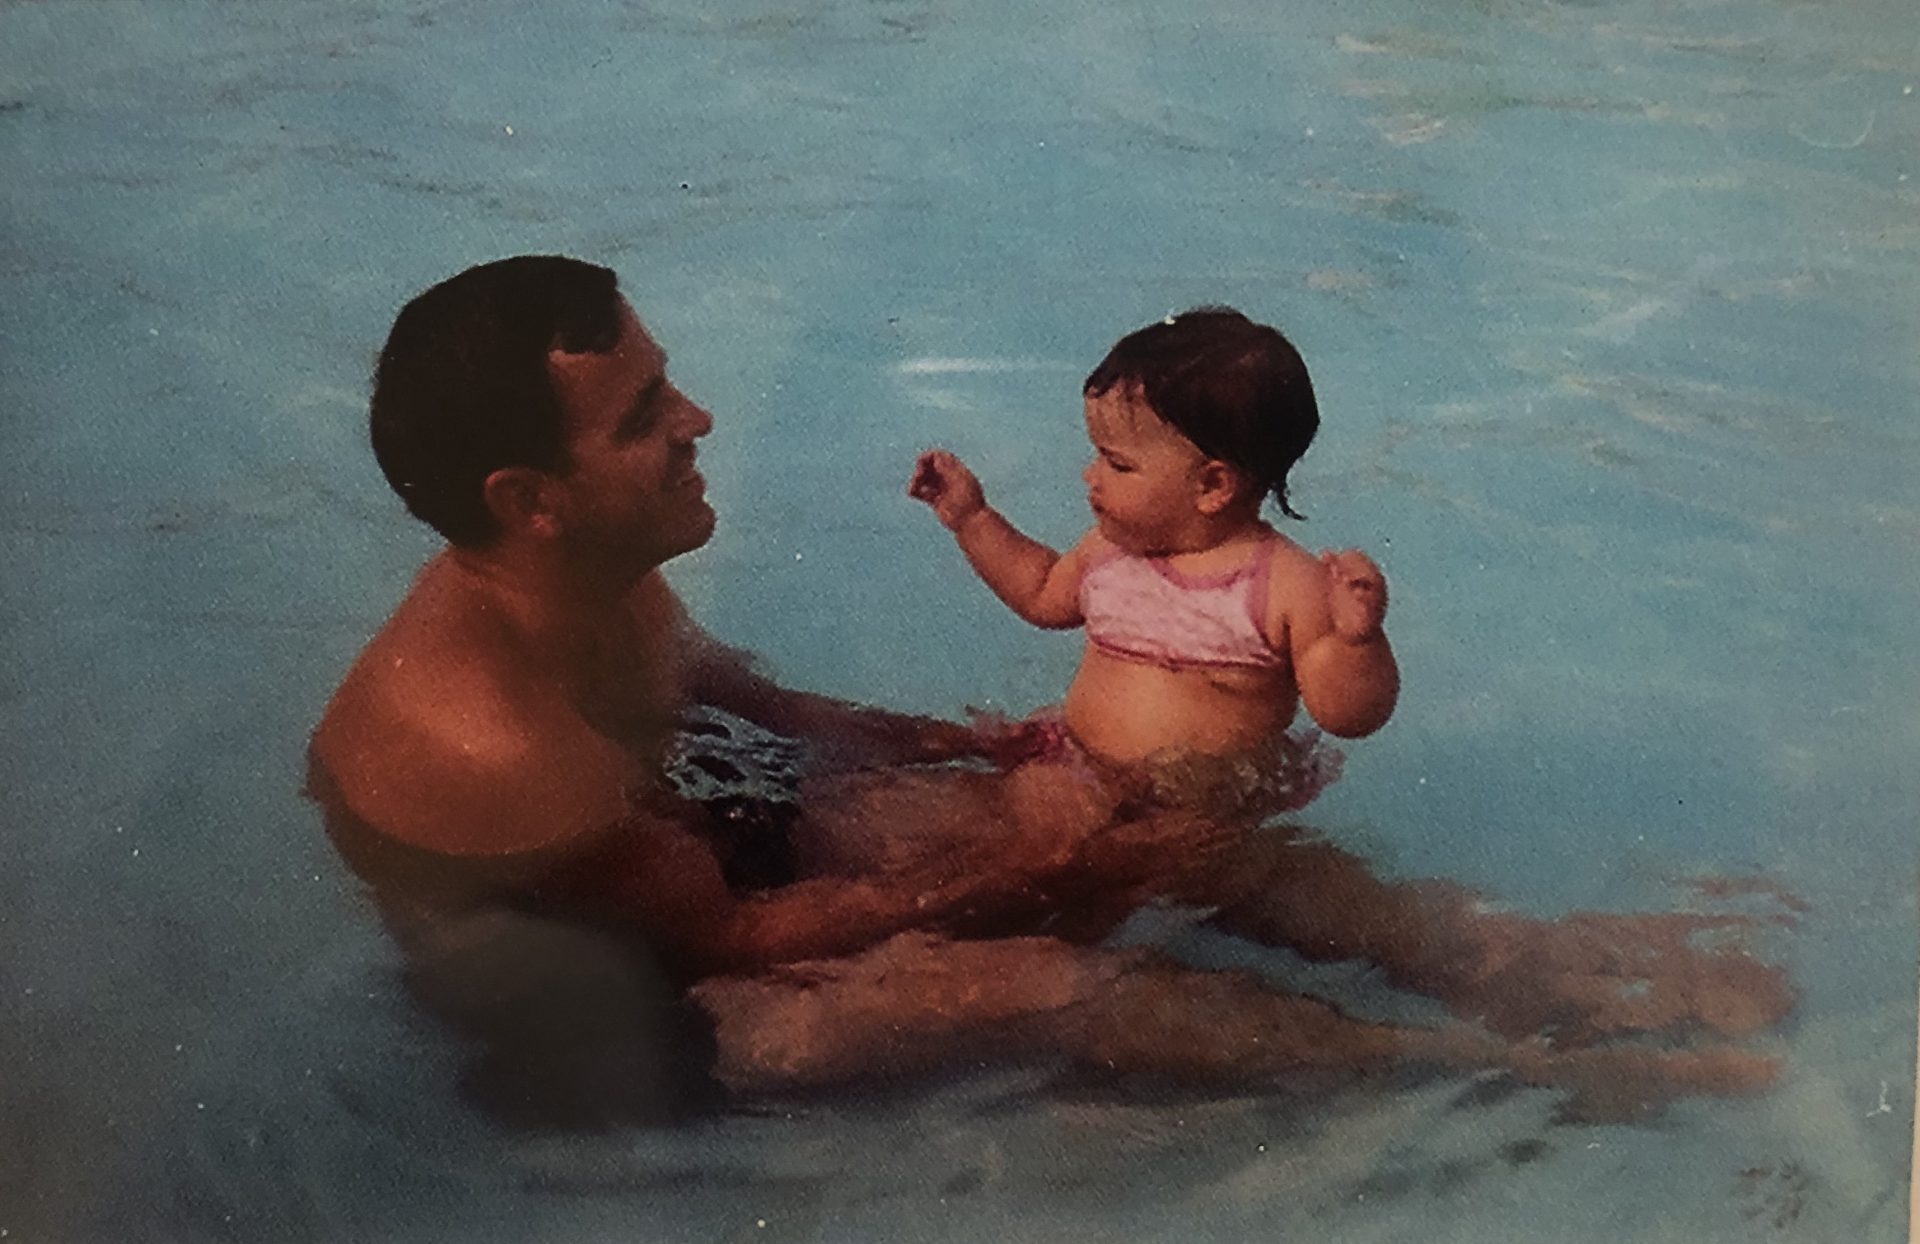 Swimming with Dad. Worthington, Ohio